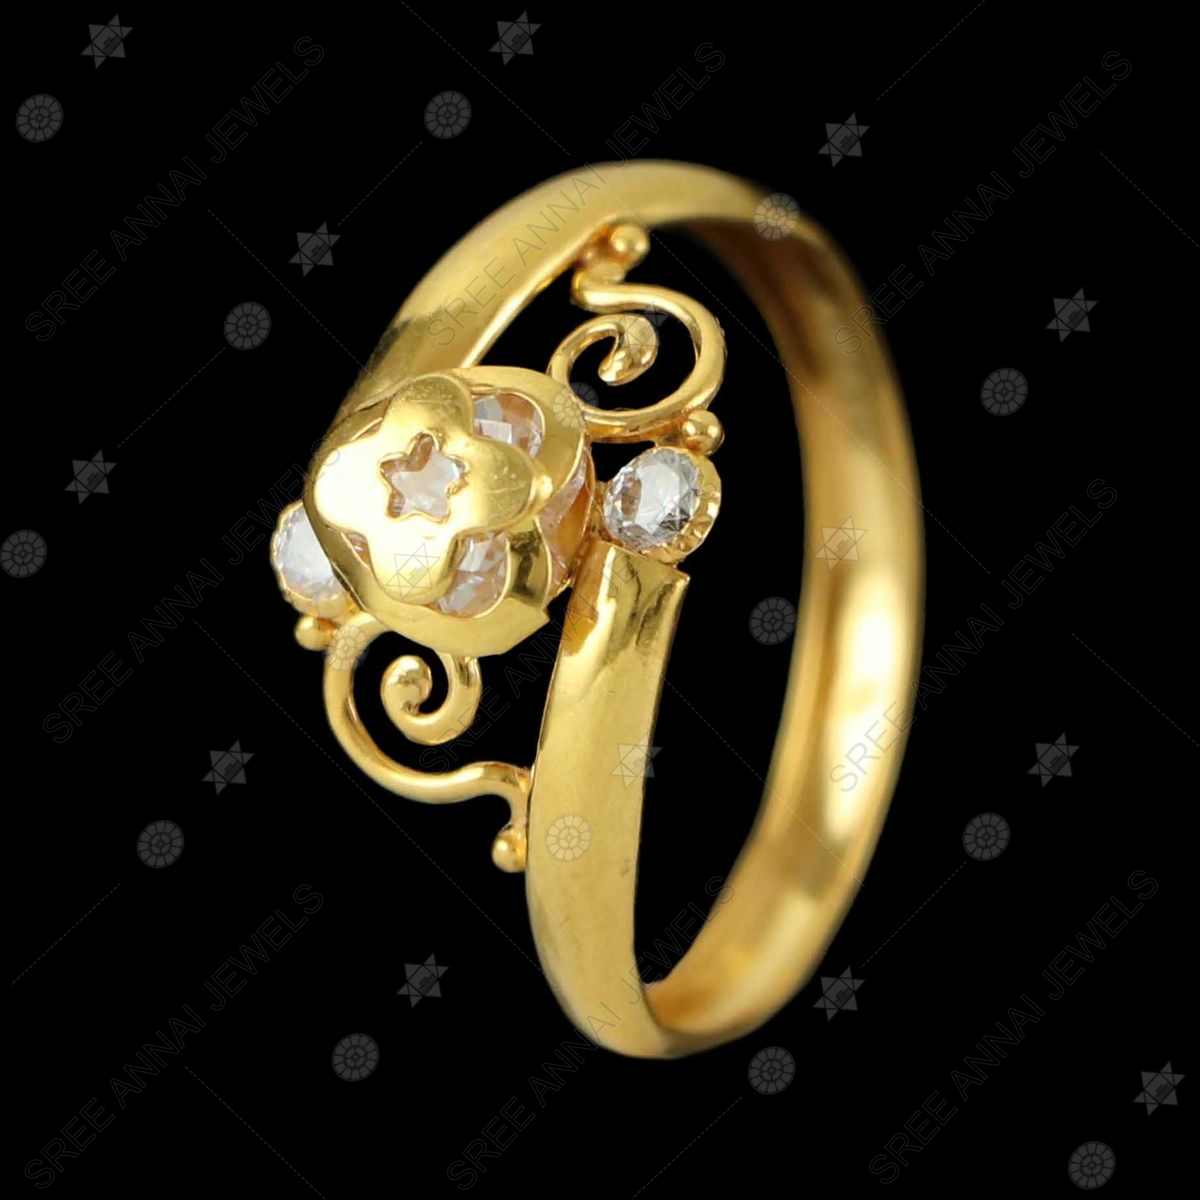 The Shiny Jafri Gold Ring